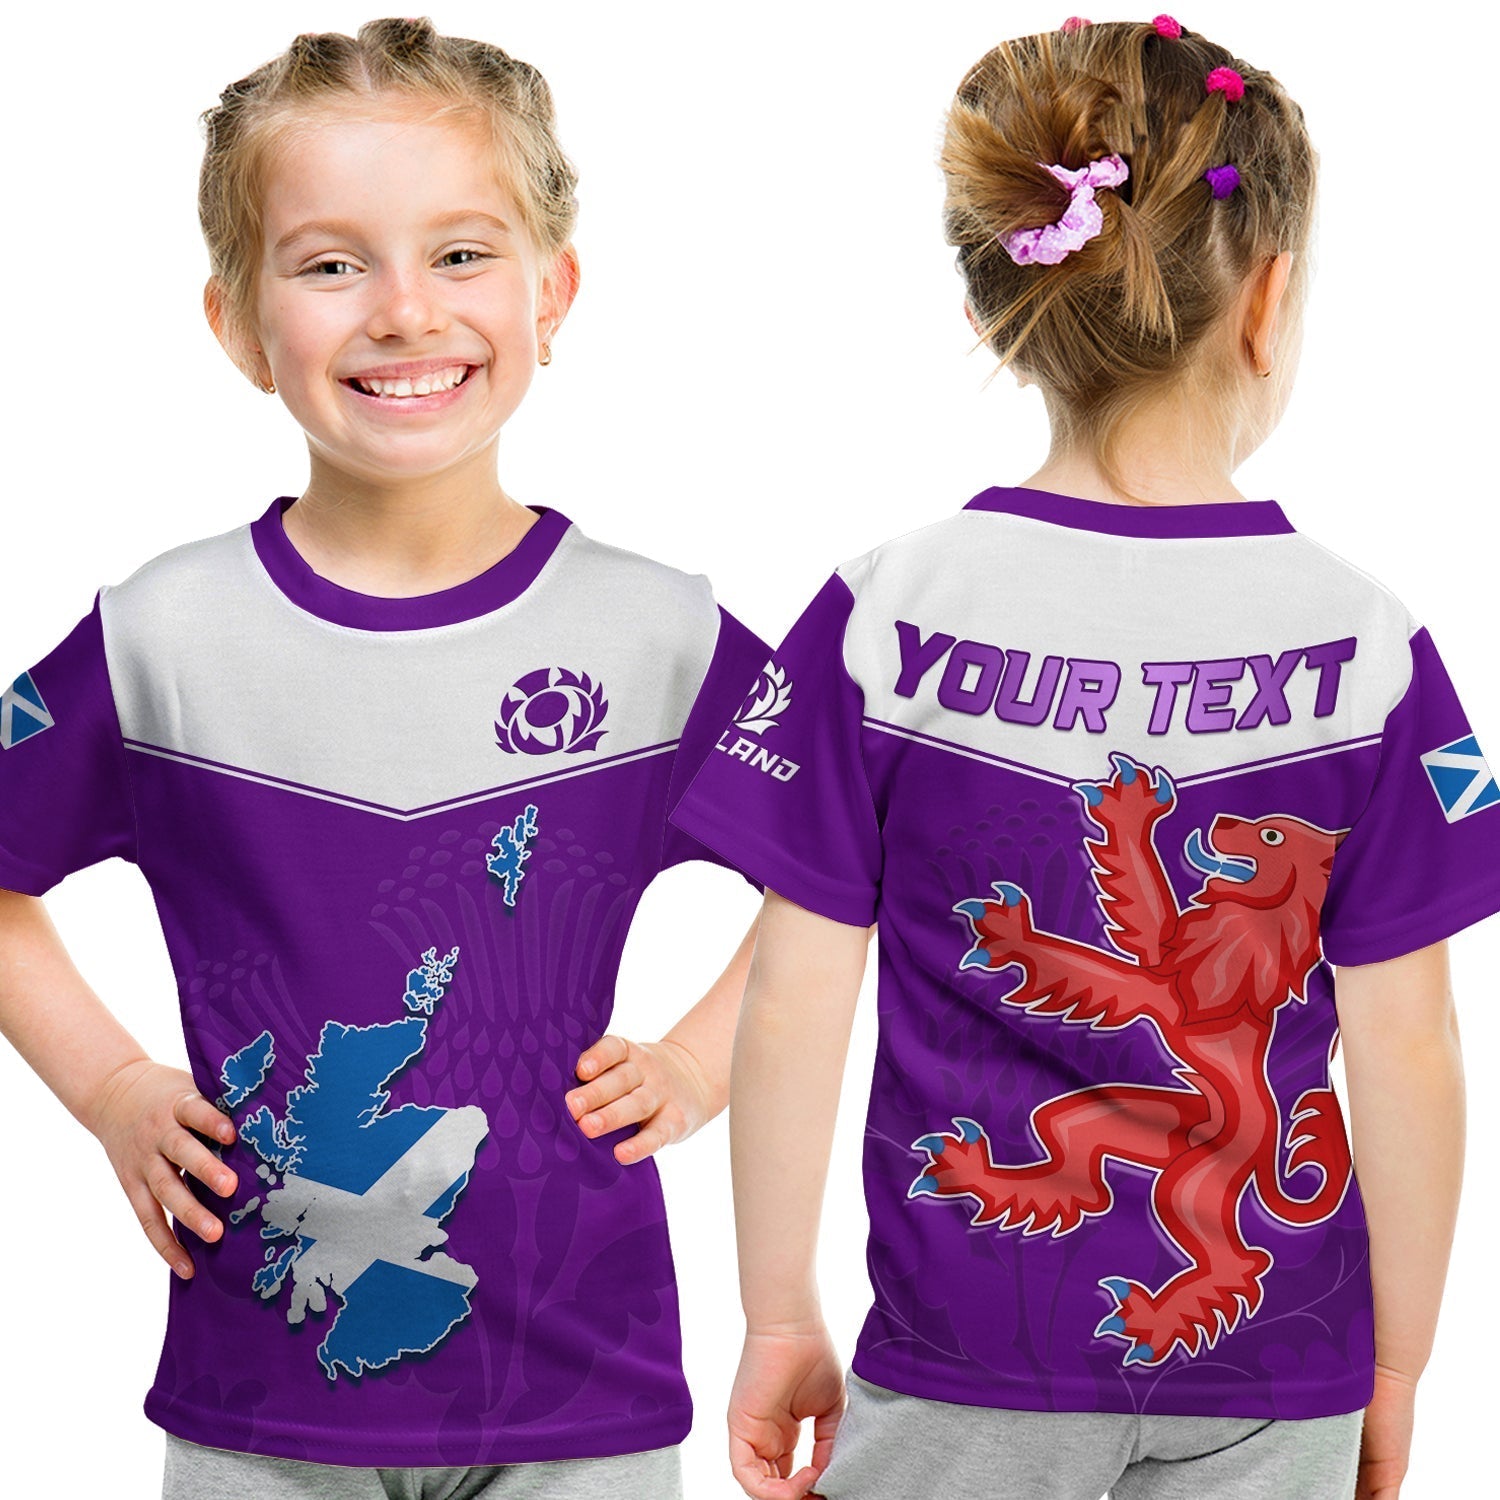 custom-personalised-scottish-rugby-t-shirt-kid-map-of-scotland-thistle-purple-version-lt14